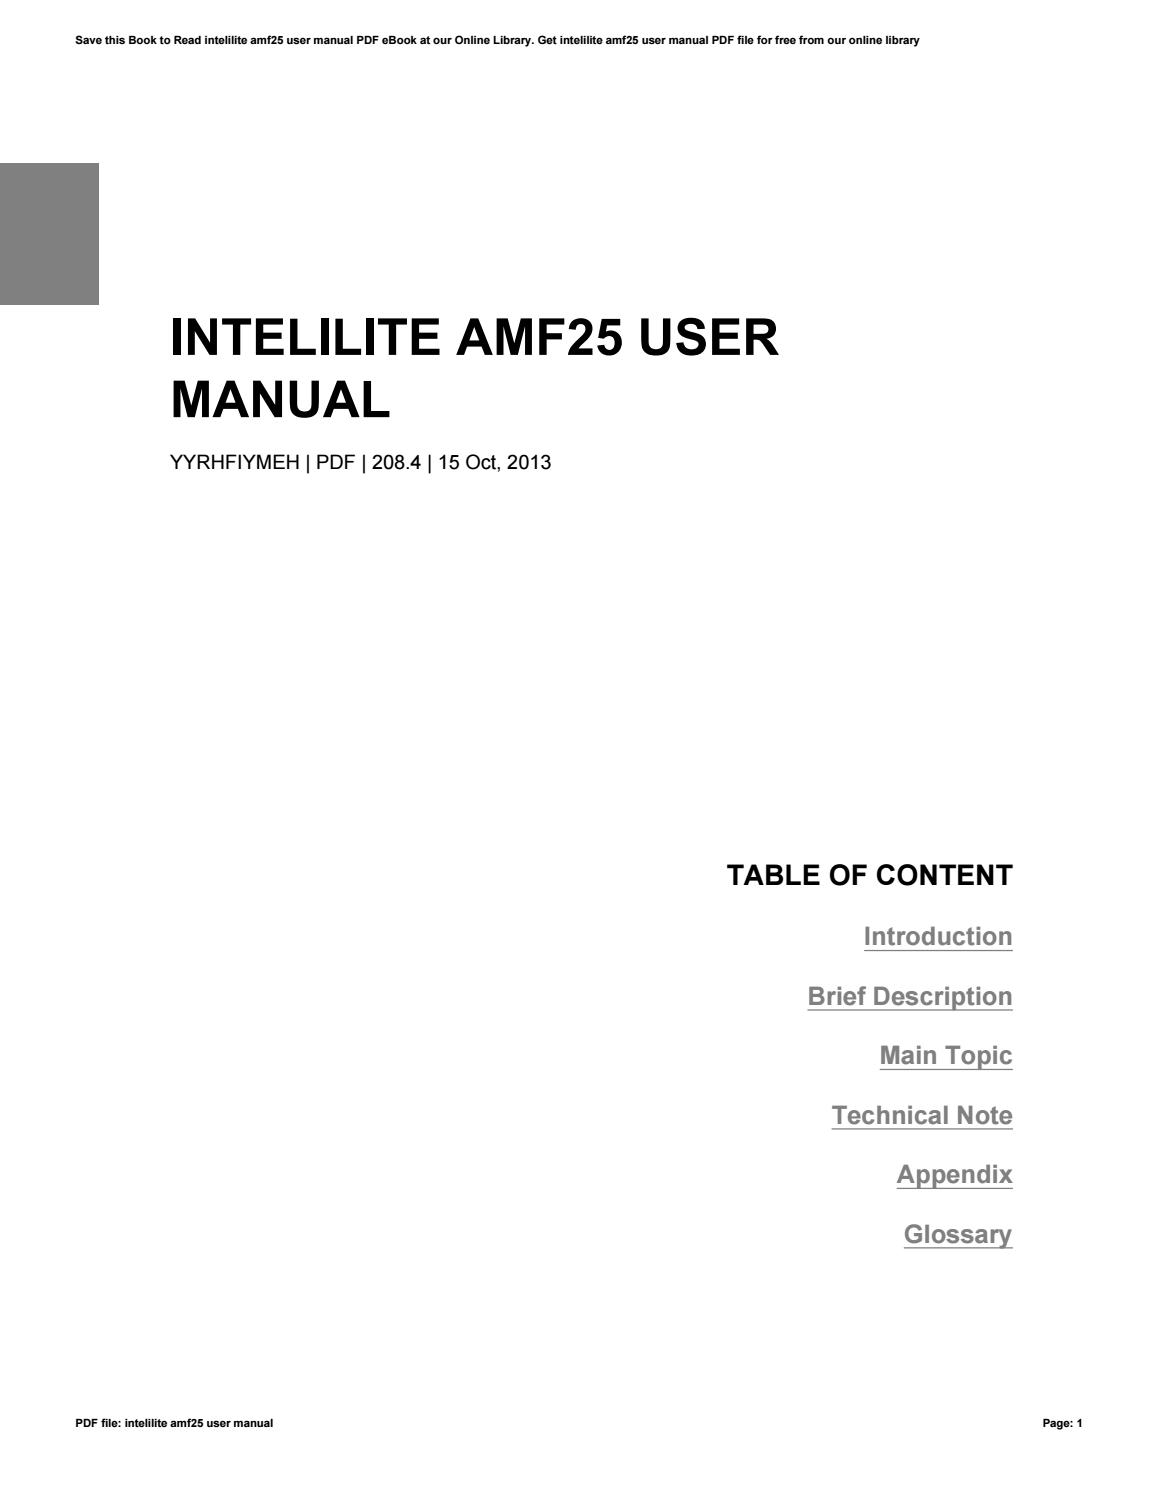 Intelilite Amf 9 User Manual Pdf